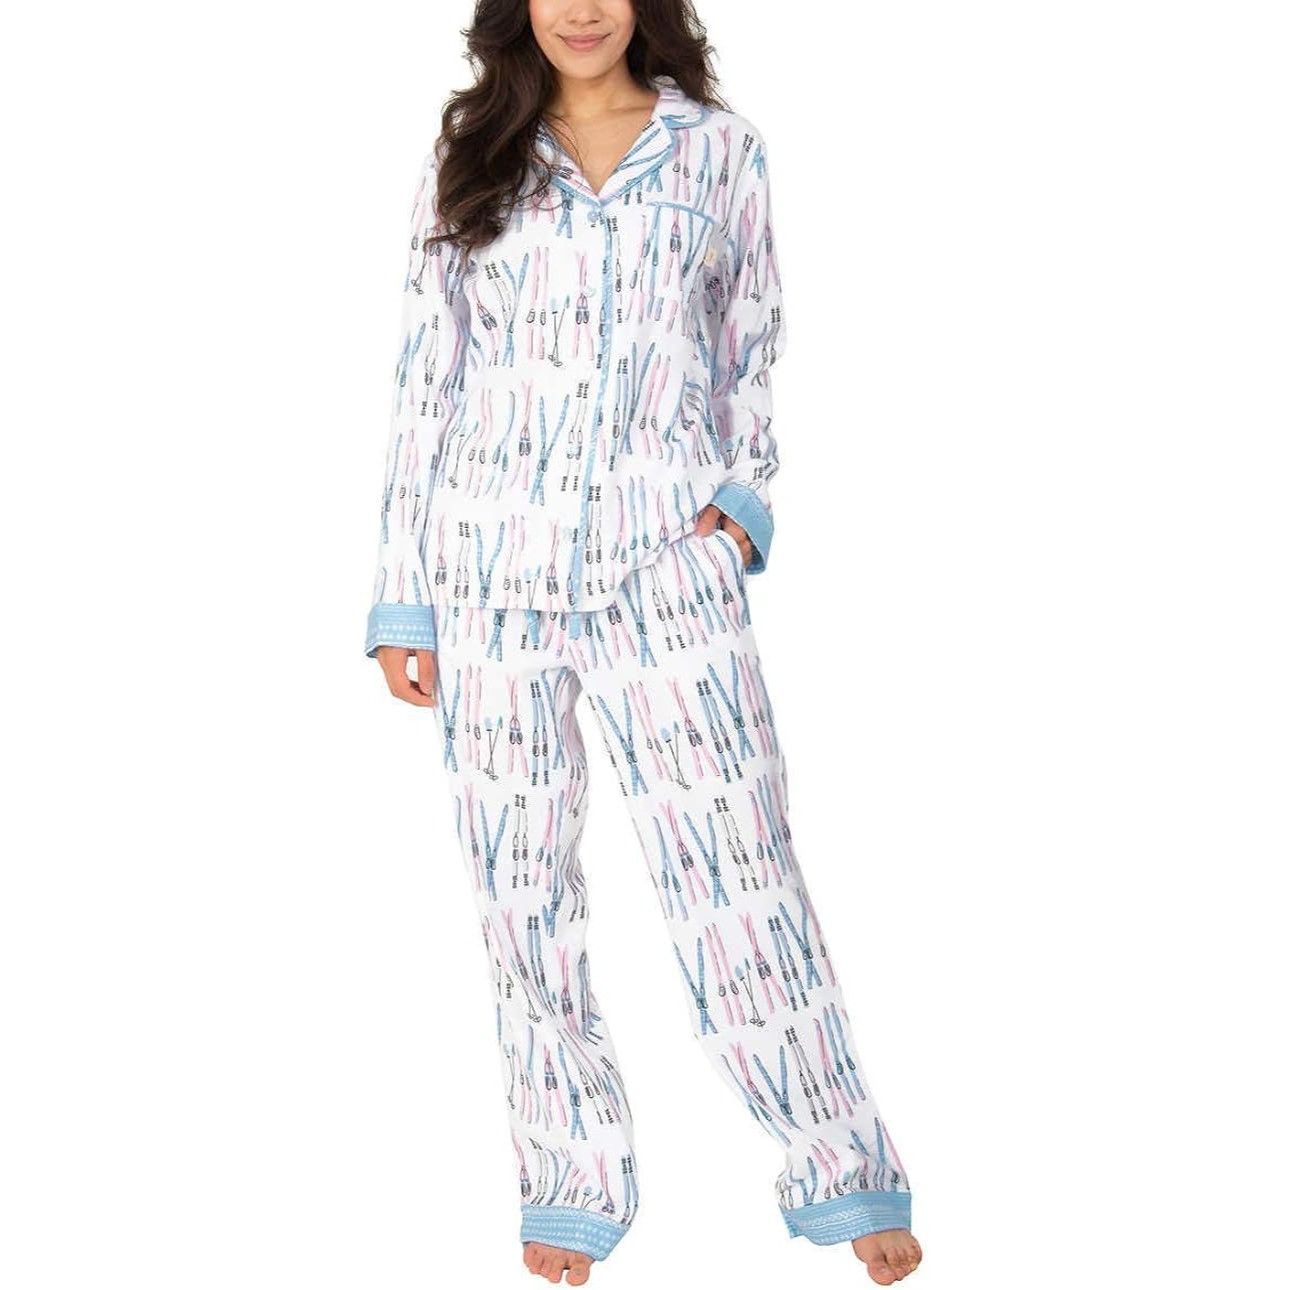 Other Munki Munki Womens M White Ski Print Flannel 2-Piece Pajamas Size M / US 6-8 / IT 42-44 - 1 Preview